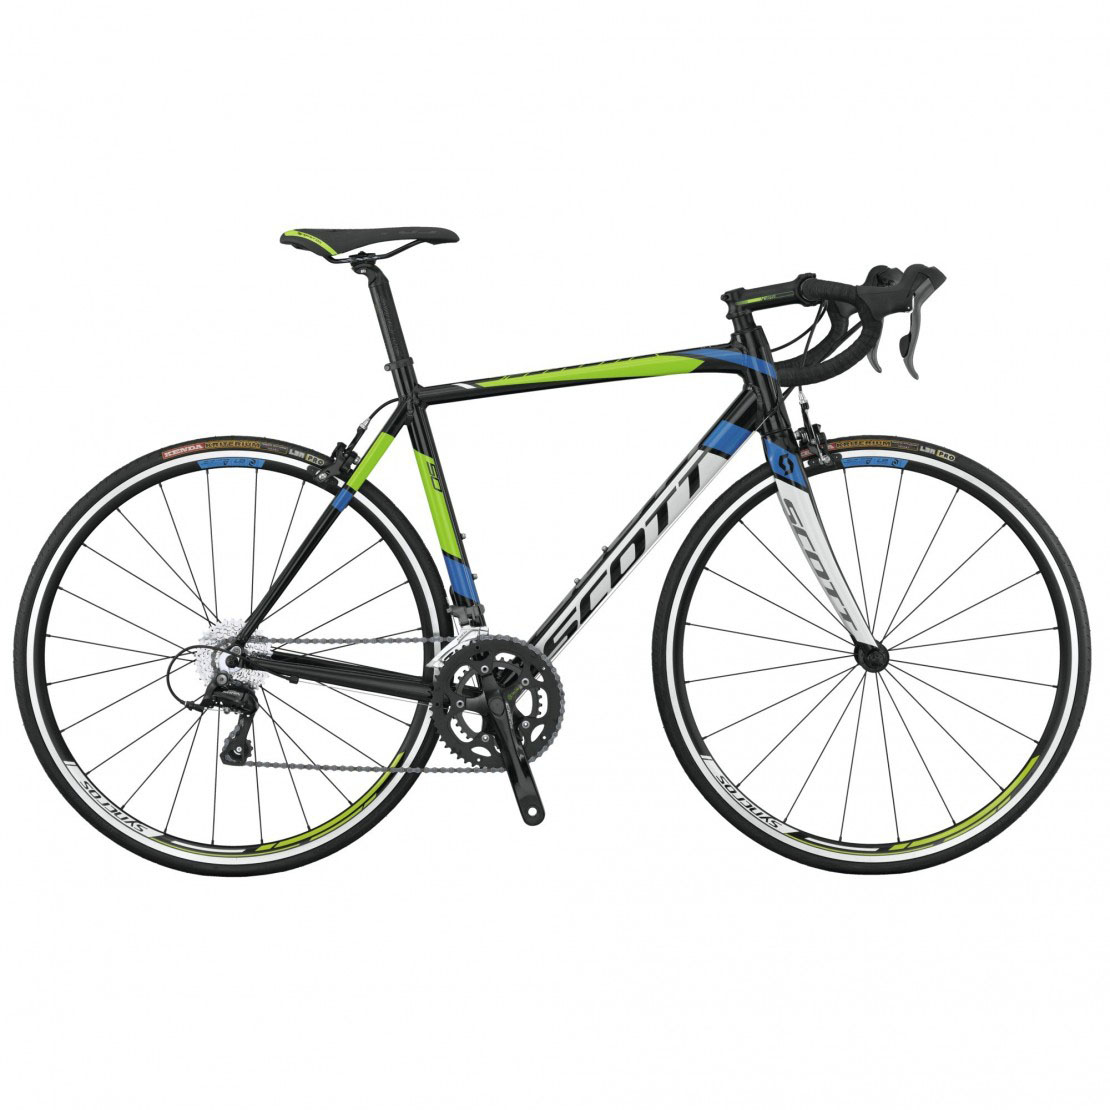 Scott Speedster 50 2015 - Road Race Bike | Road Bikes from £310